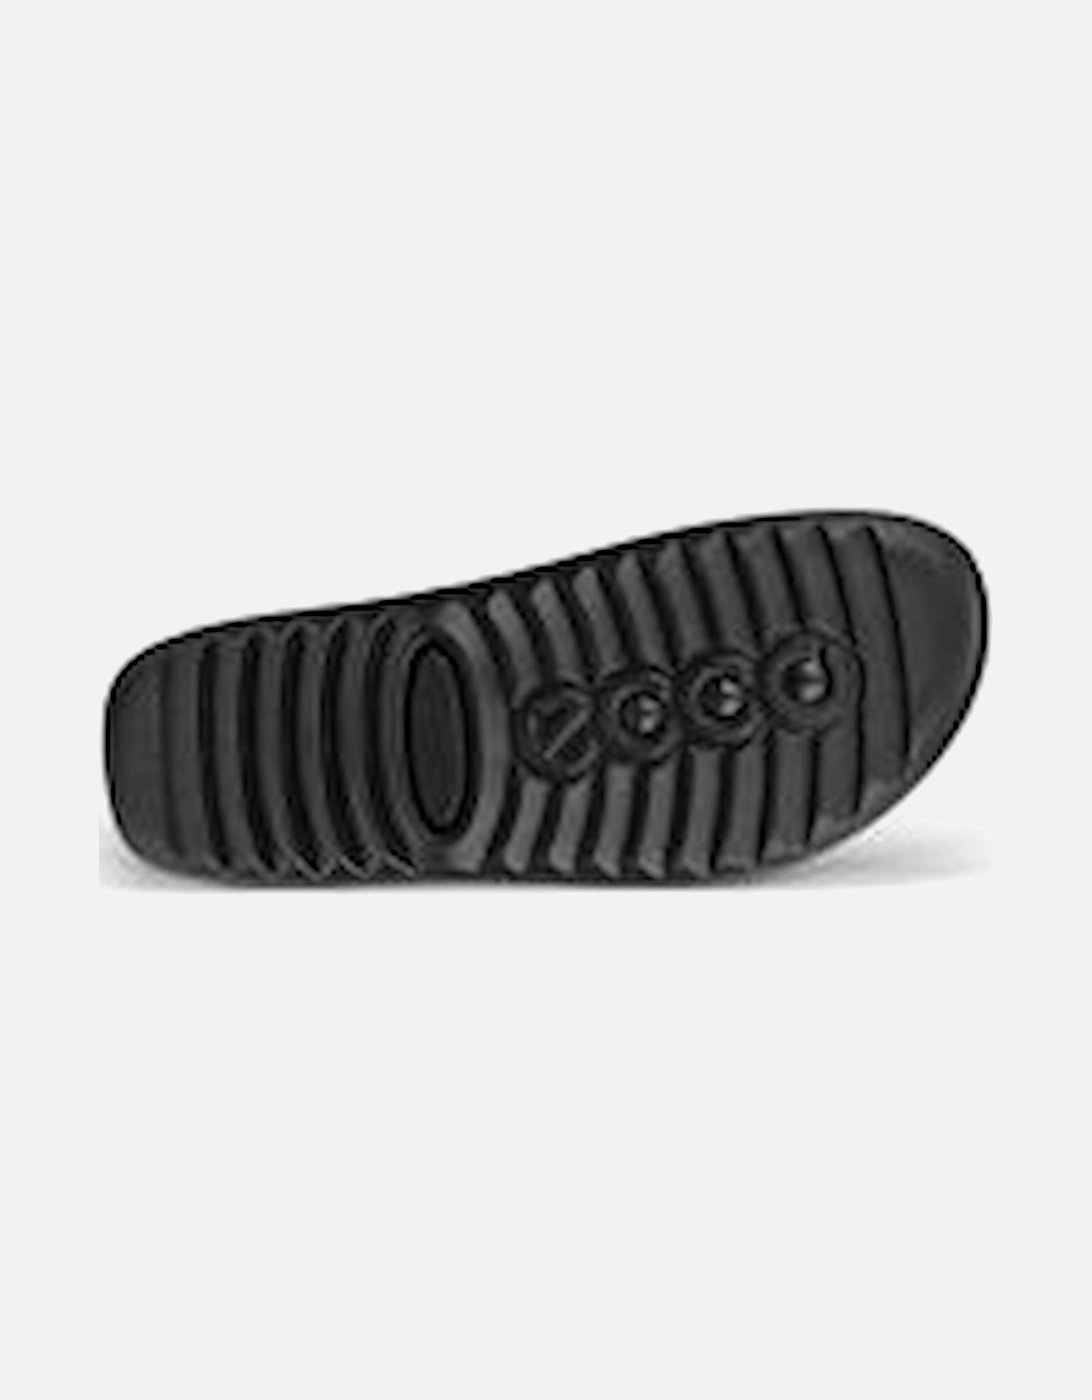 Cozmo Womens Sandal 206883-01001 in Black leather